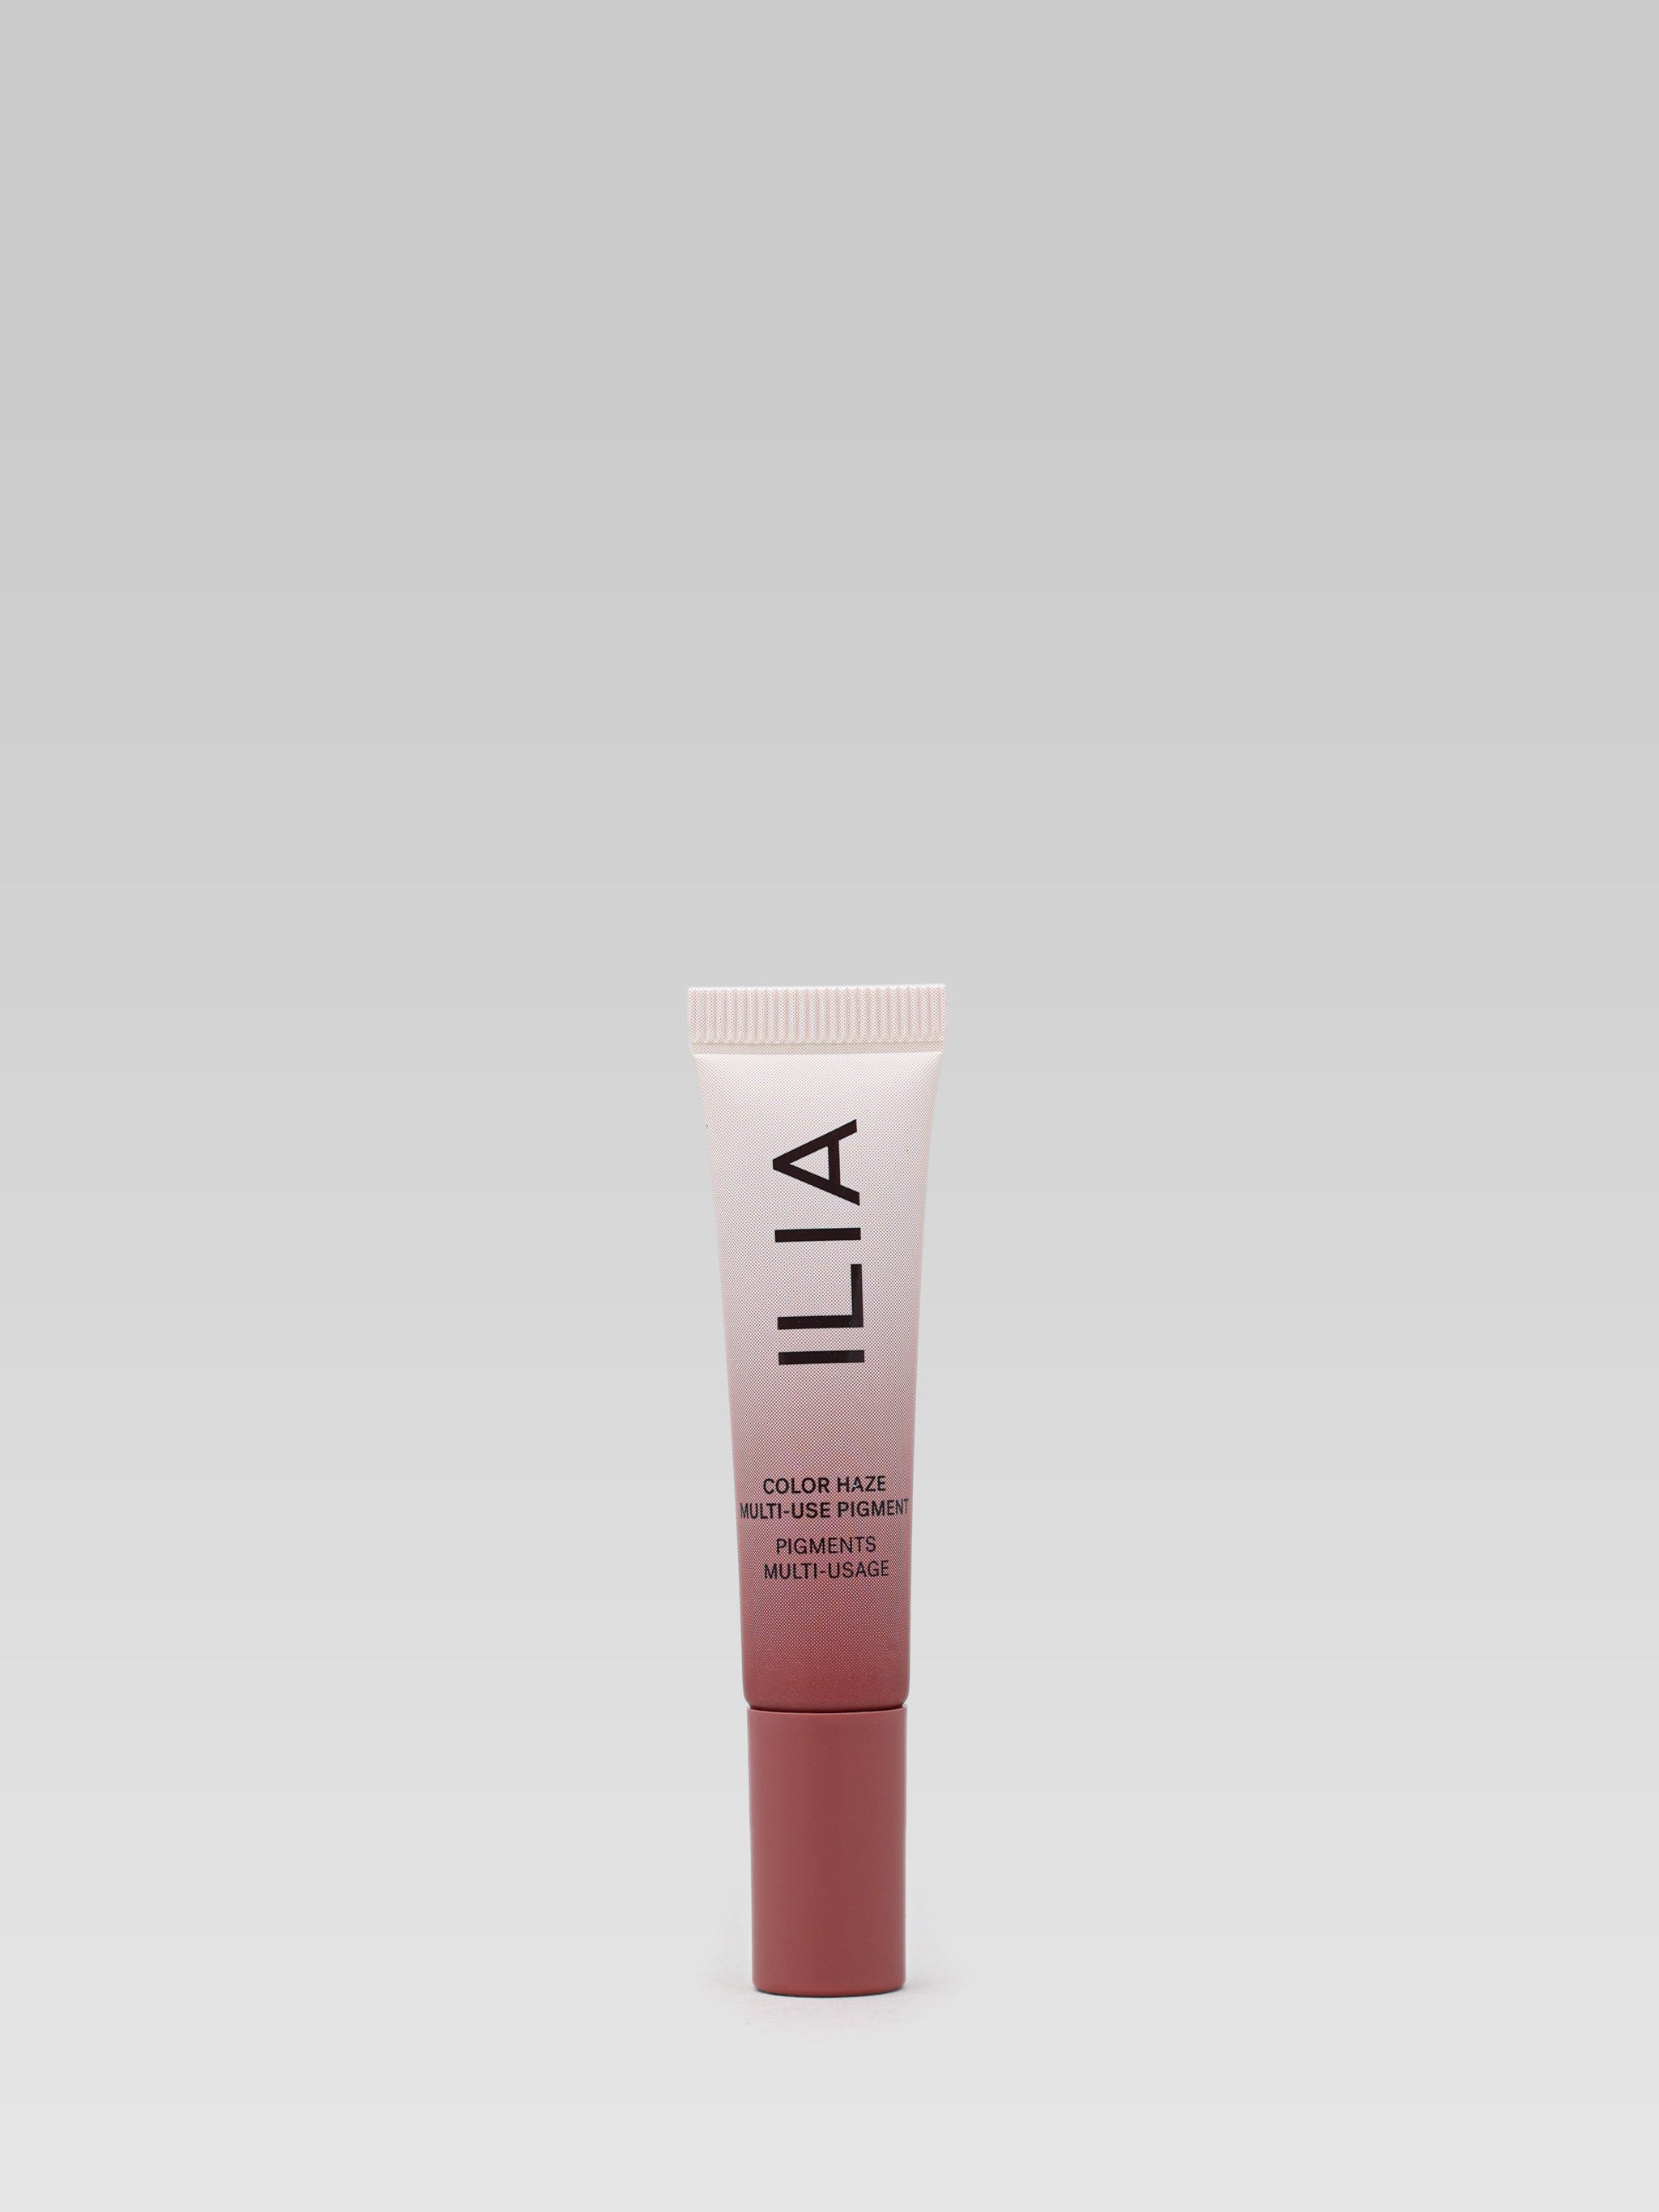 Ilia Beauty Color Haze product shot